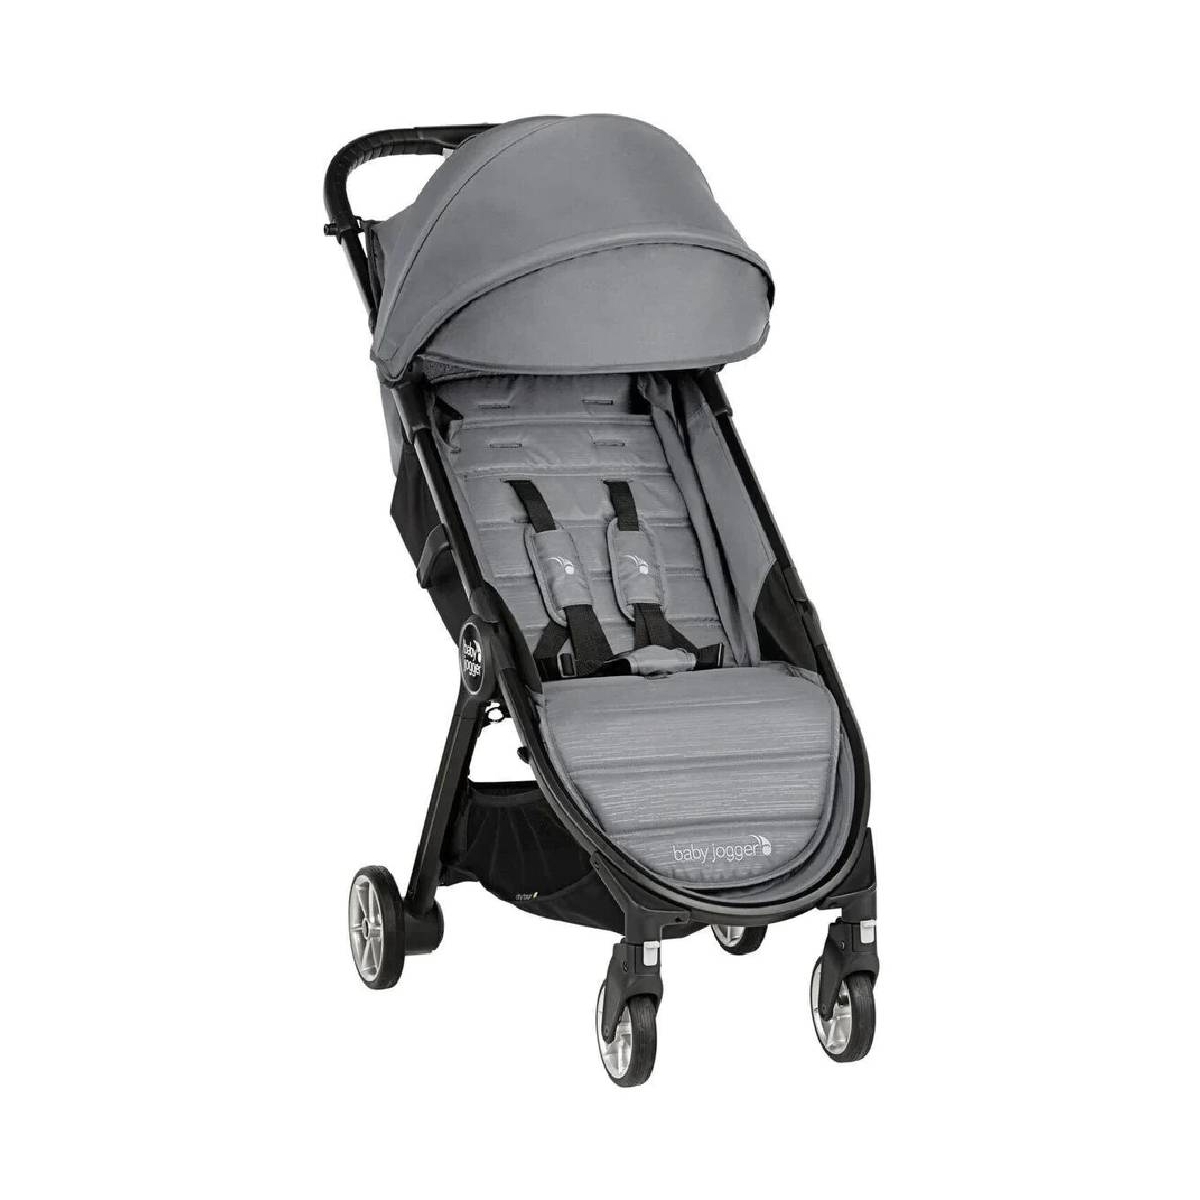 Baby Jogger City Tour 2 Compact Fold Stroller